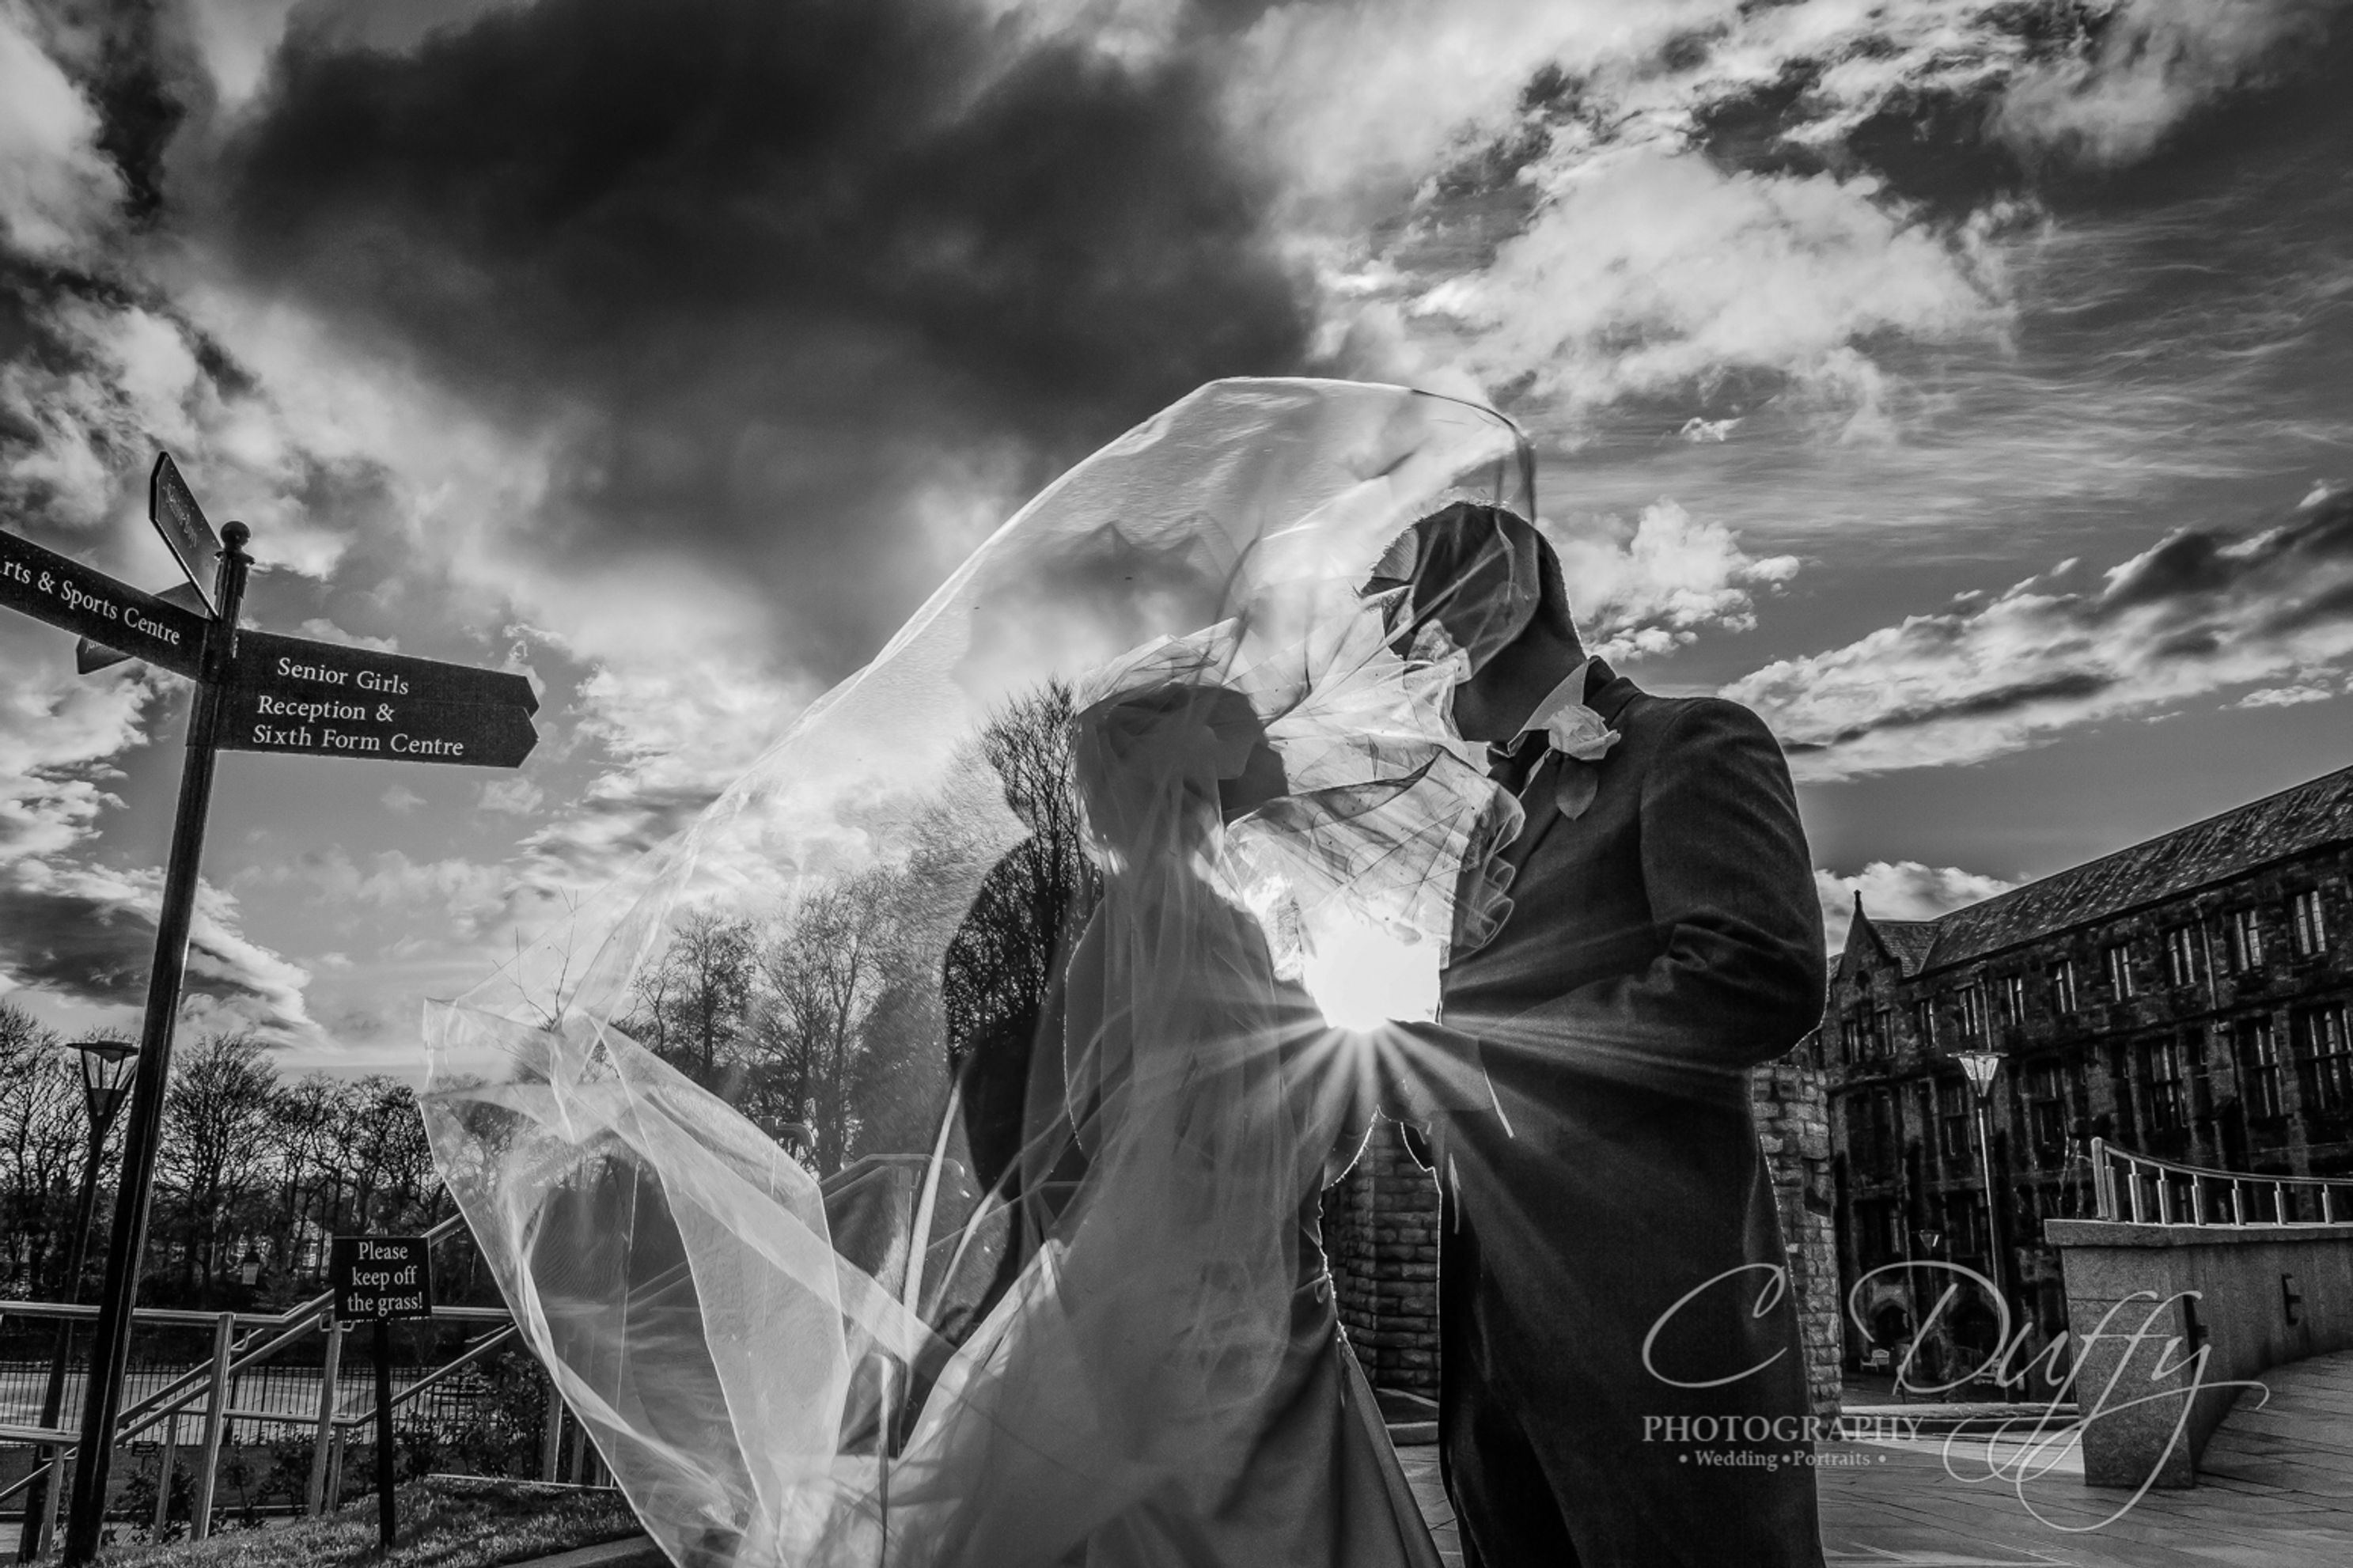 Stunning creative bride and groom portrait captured by Bolton School Wedding Photographer